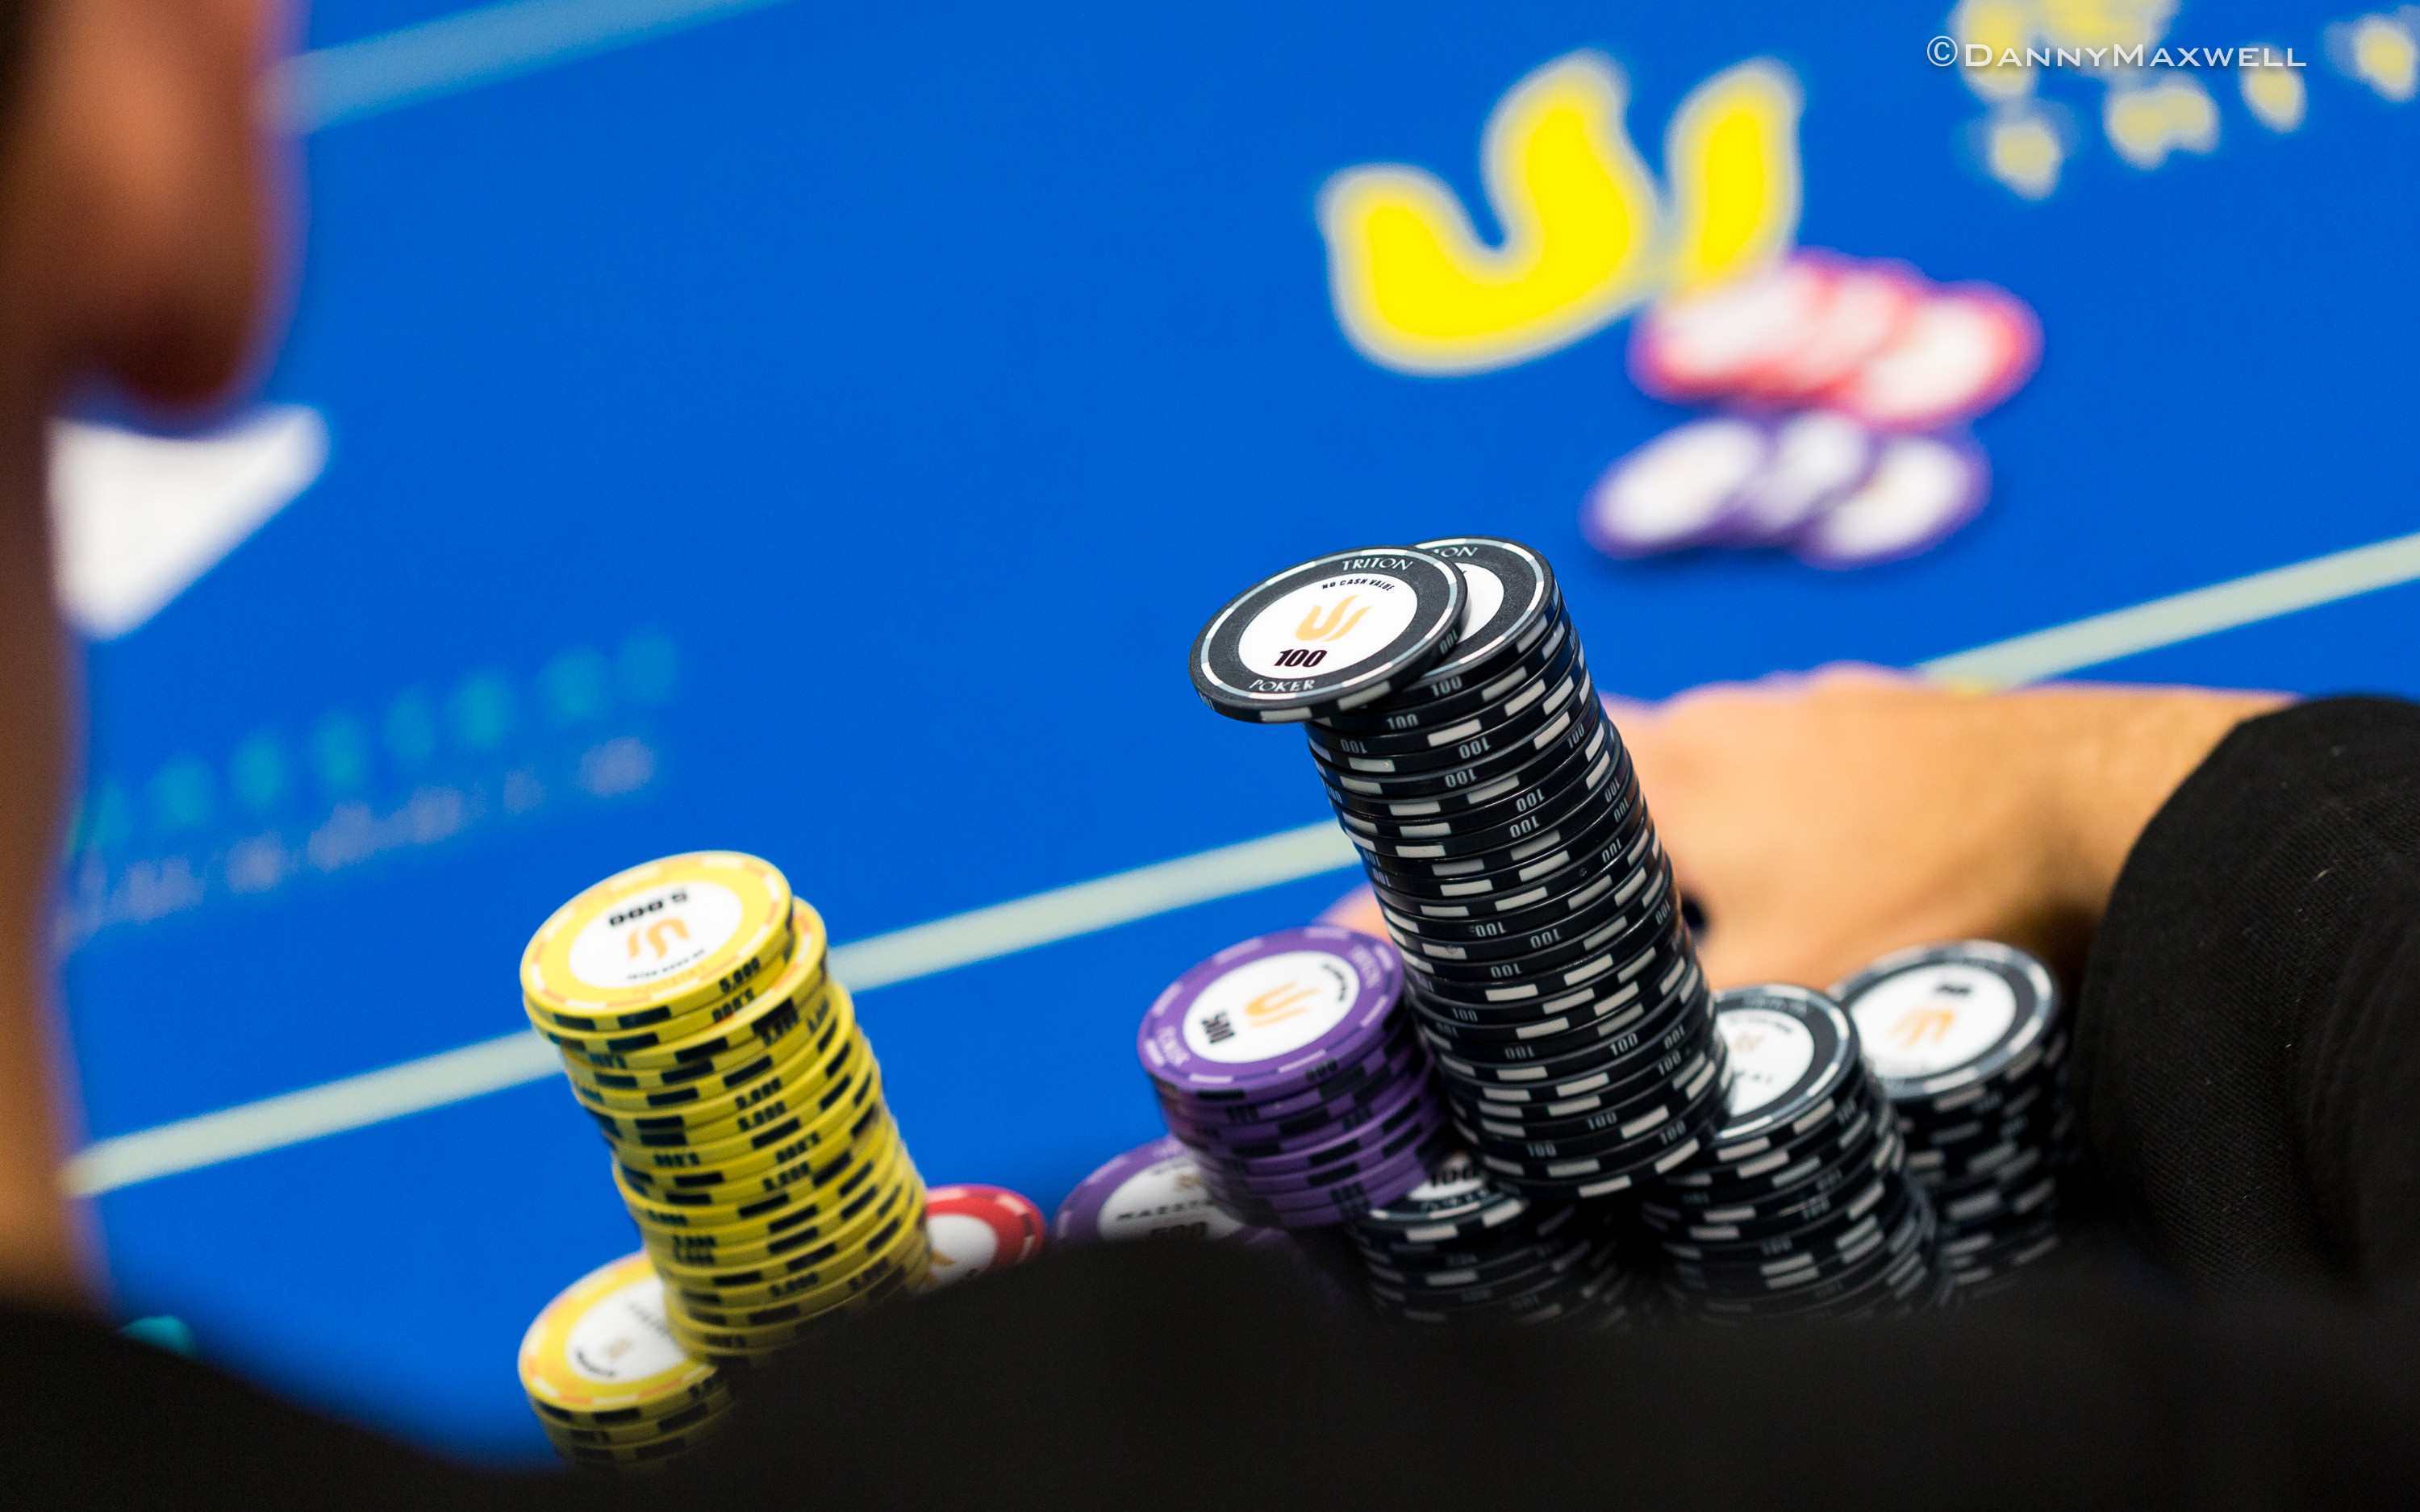 Grosvenor casino stoke poker schedule for today